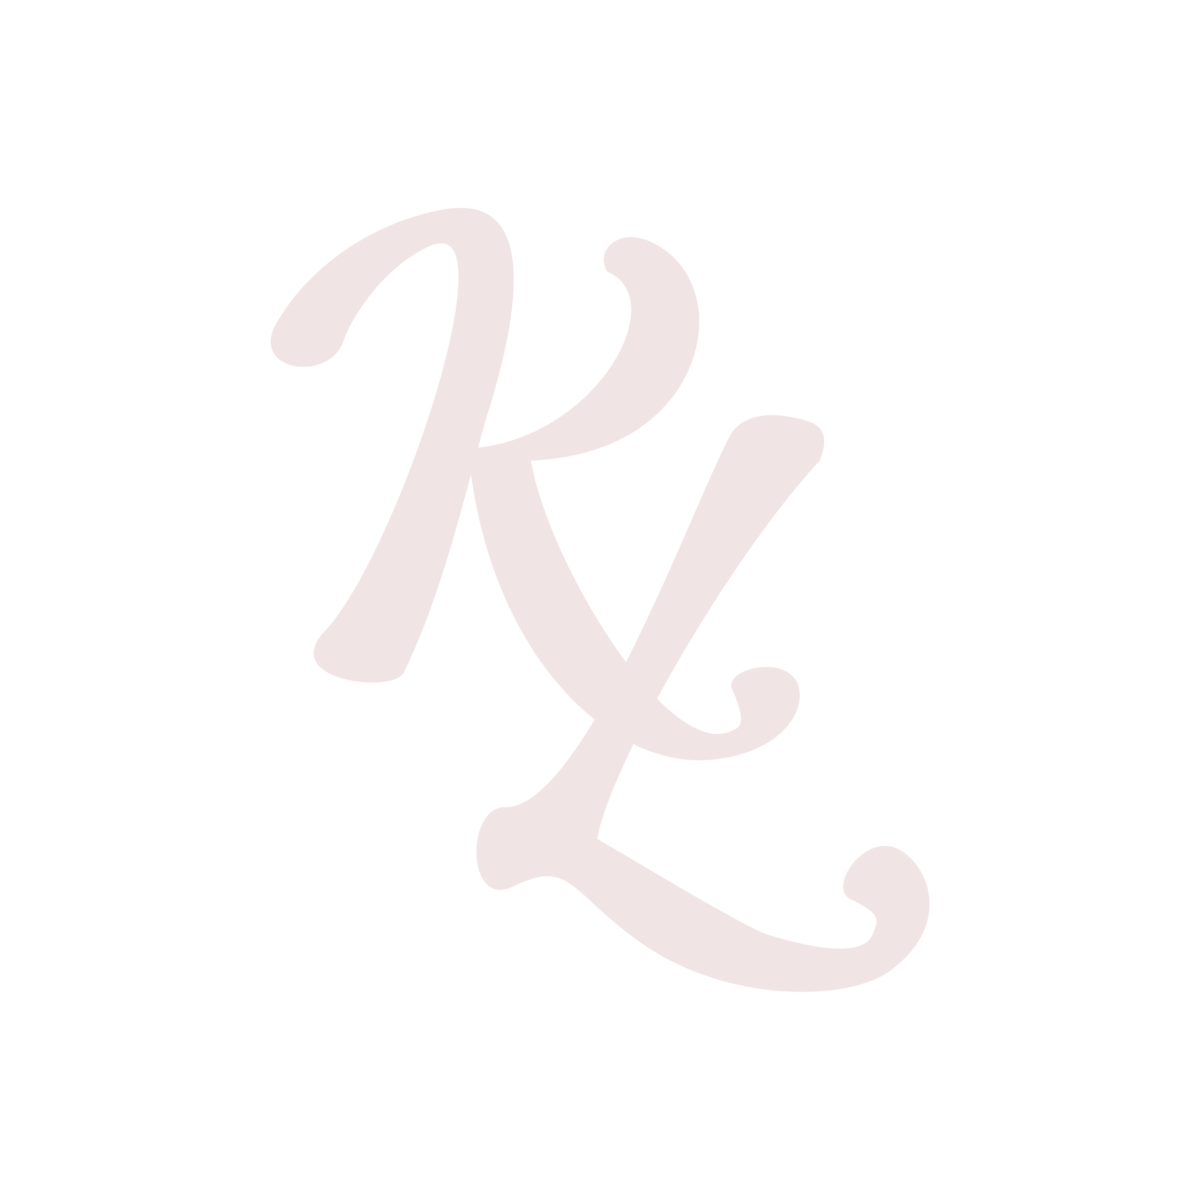 Logo that says KL.